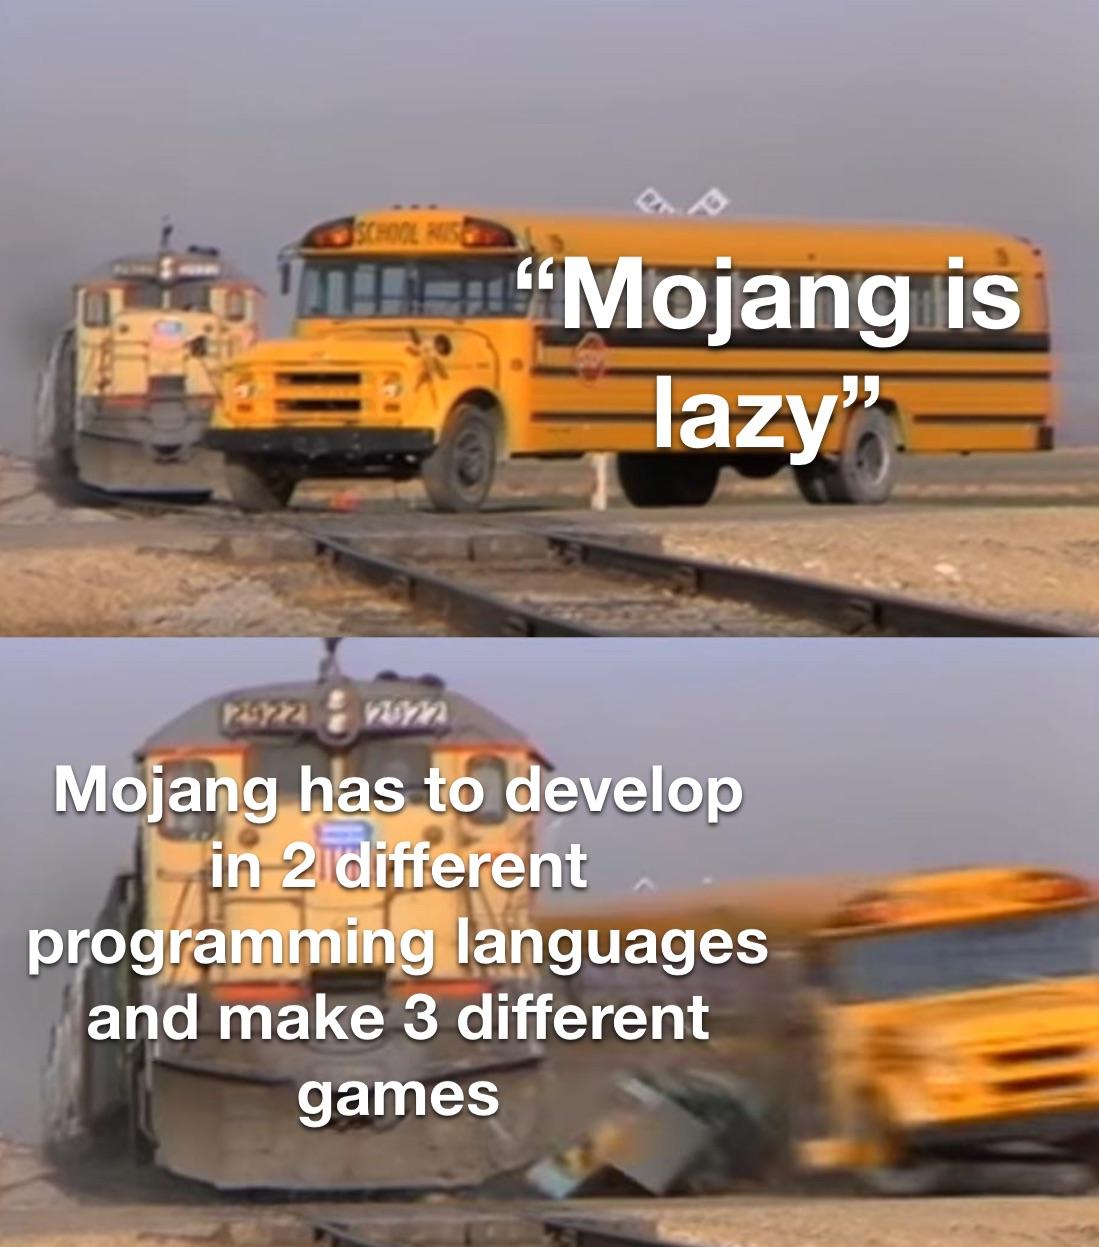 Minecraft Memes - Don’t make broad statements